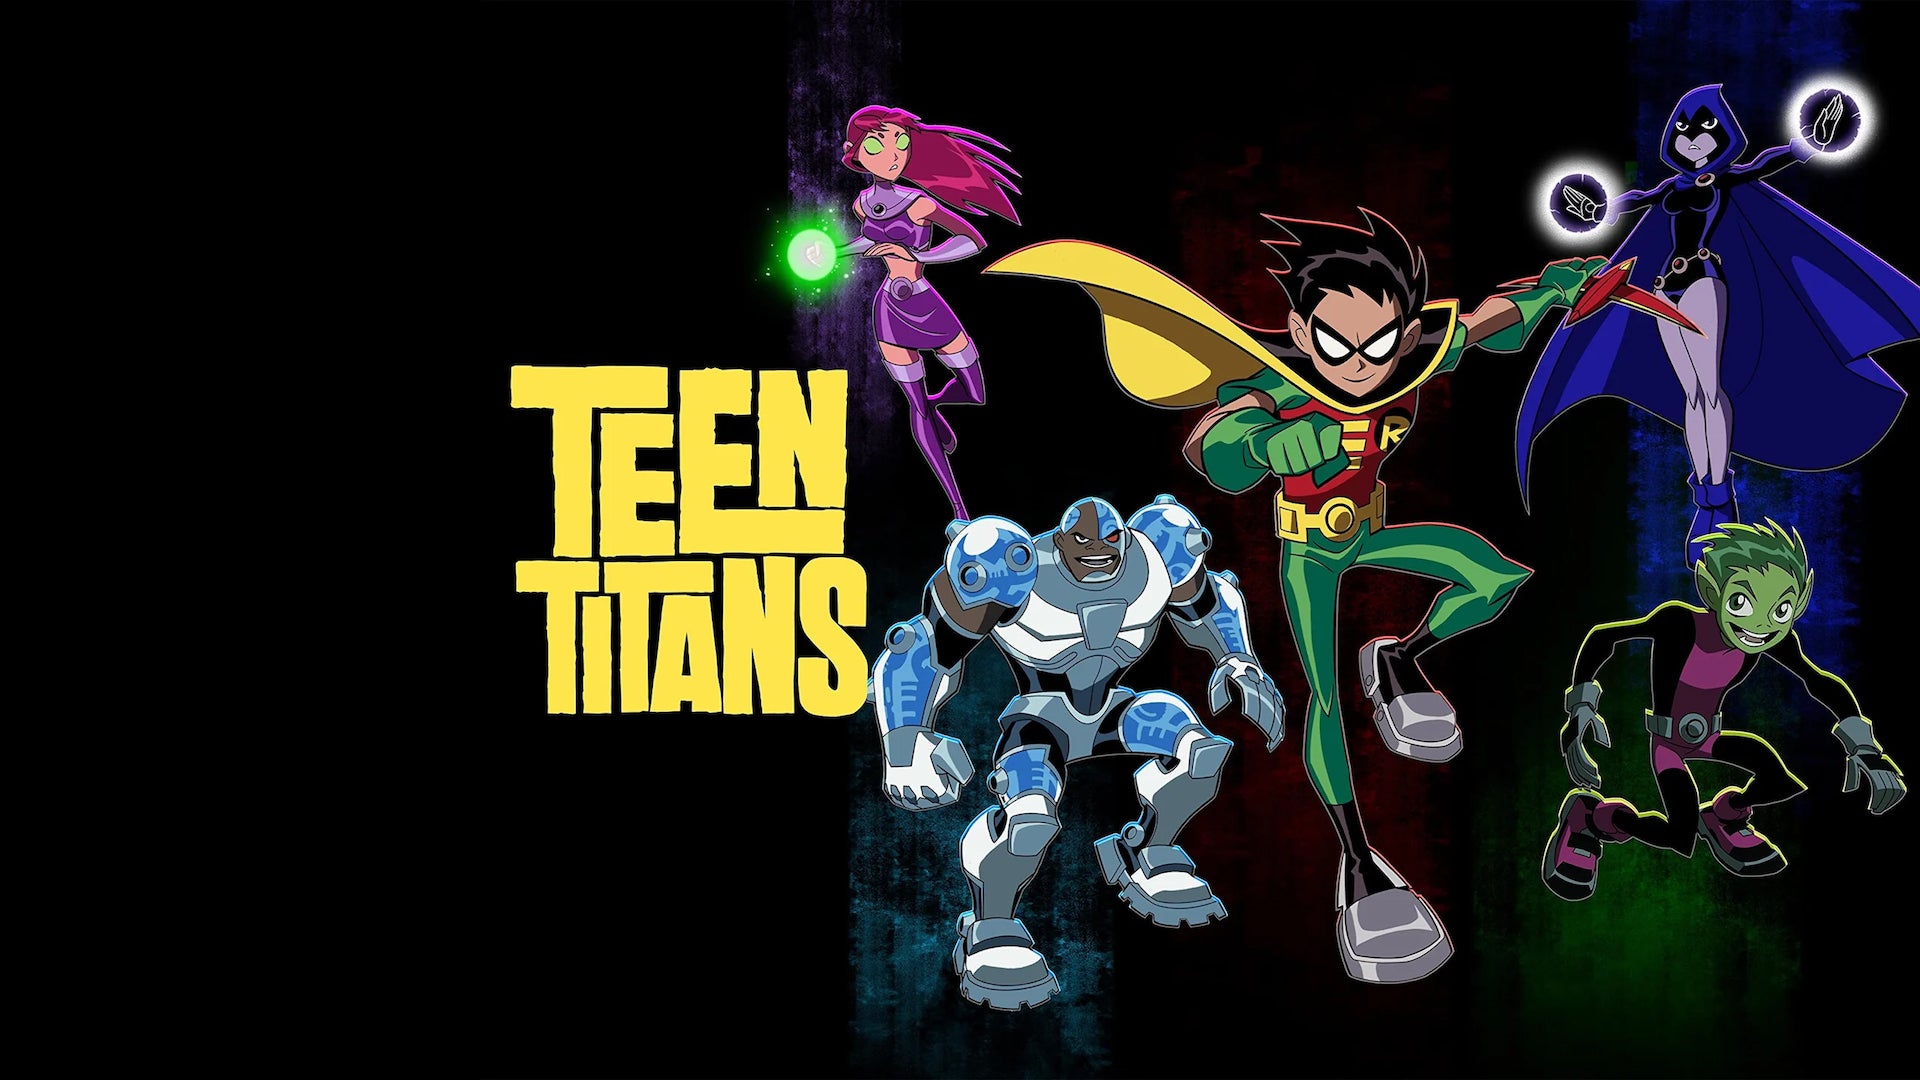 Teen Titans: The Complete 1st Season